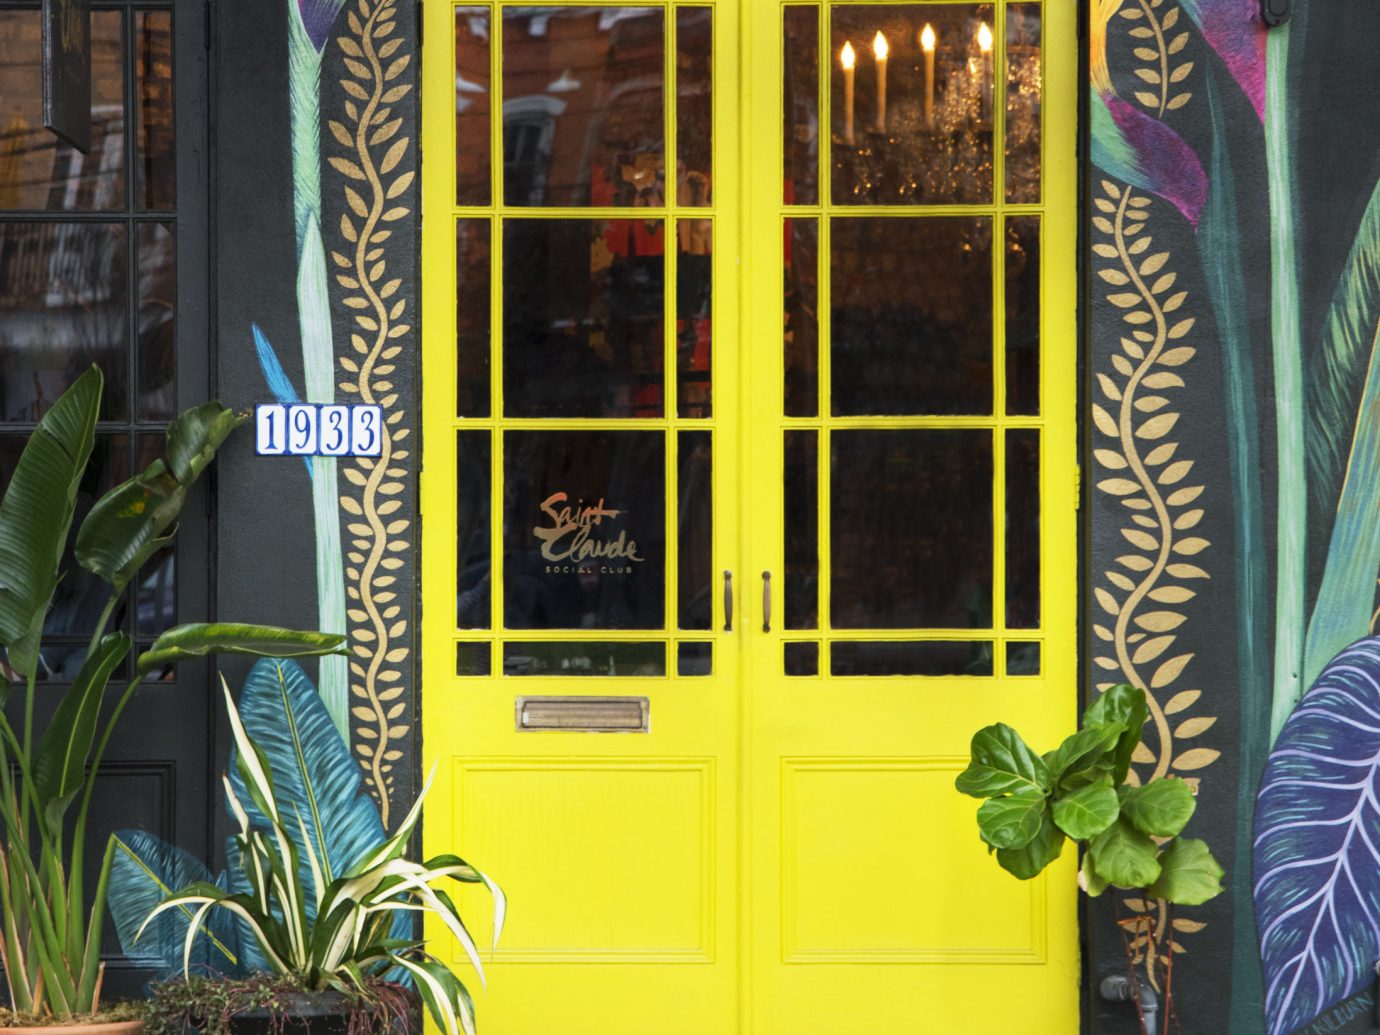 Girls Getaways New Orleans Trip Ideas Weekend Getaways yellow door window house facade plant